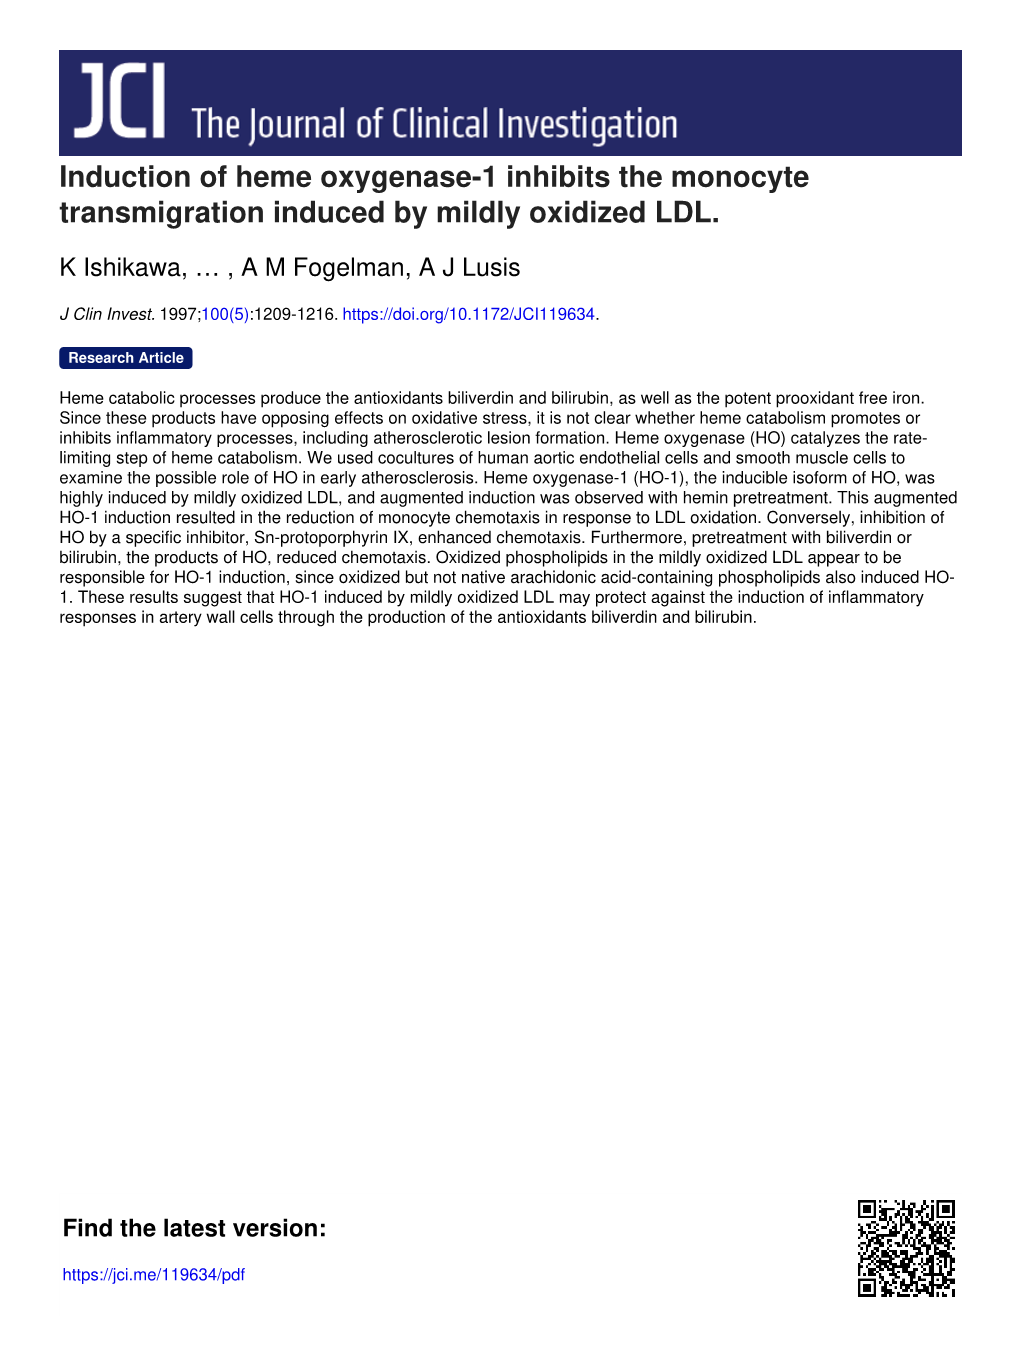 Induction of Heme Oxygenase-1 Inhibits the Monocyte Transmigration Induced by Mildly Oxidized LDL